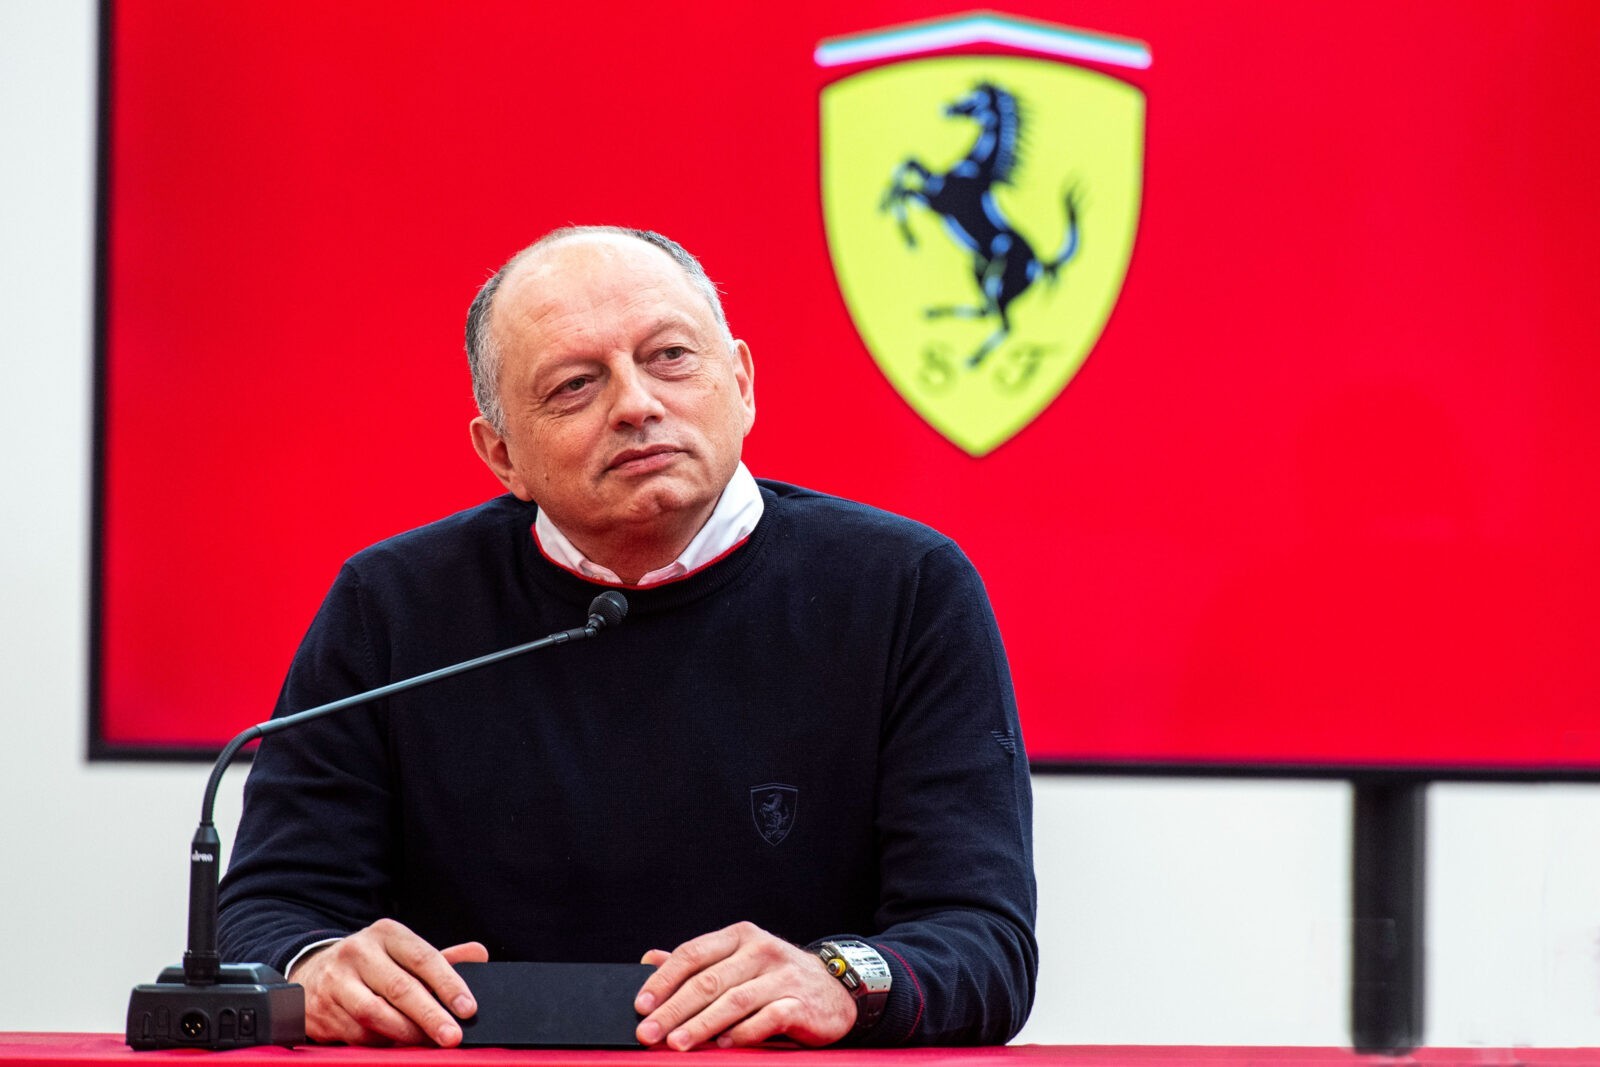 Ferrari ongekend fel: hardere straf overschrijden budgetcap